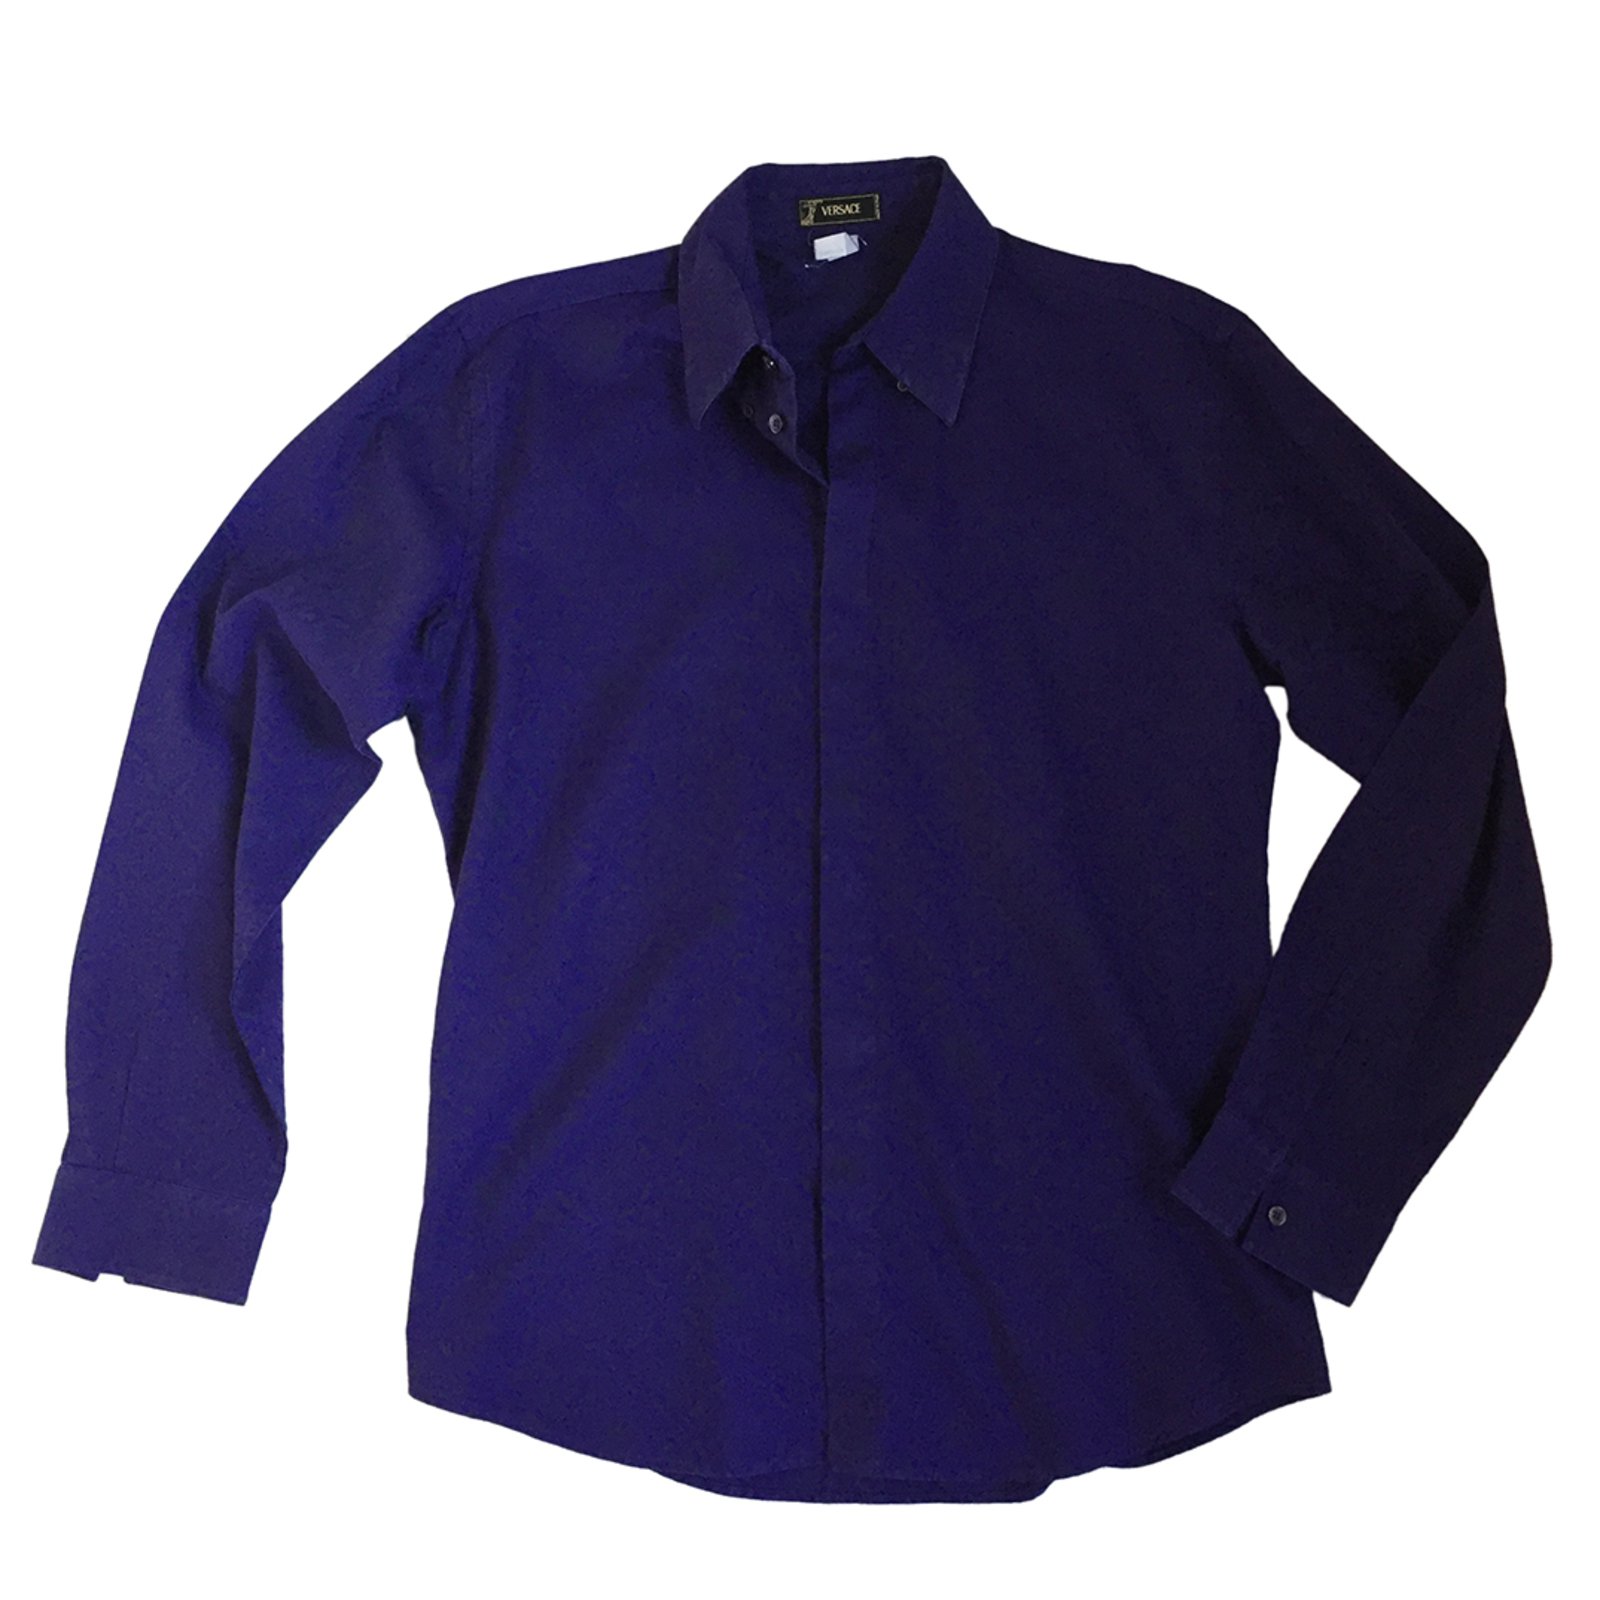 Versace Shirts Shirts Cotton Purple ref 